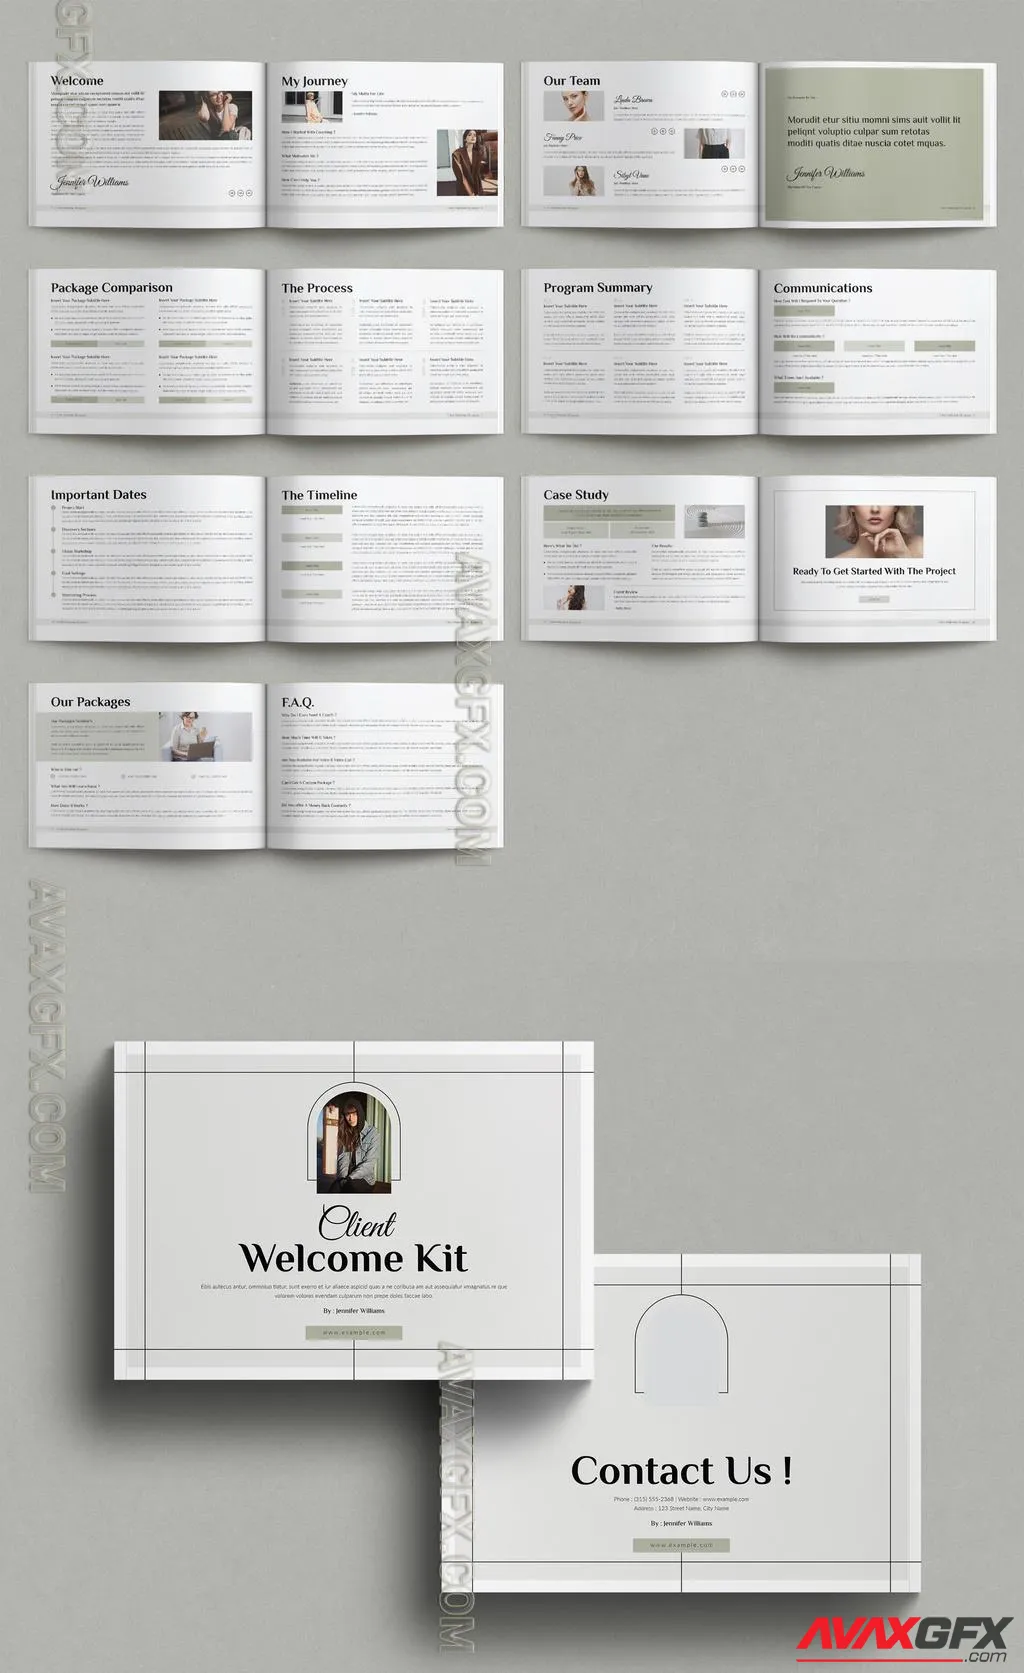 Adobestock - Welcome Kit Layout Design Template Landscape 757181424